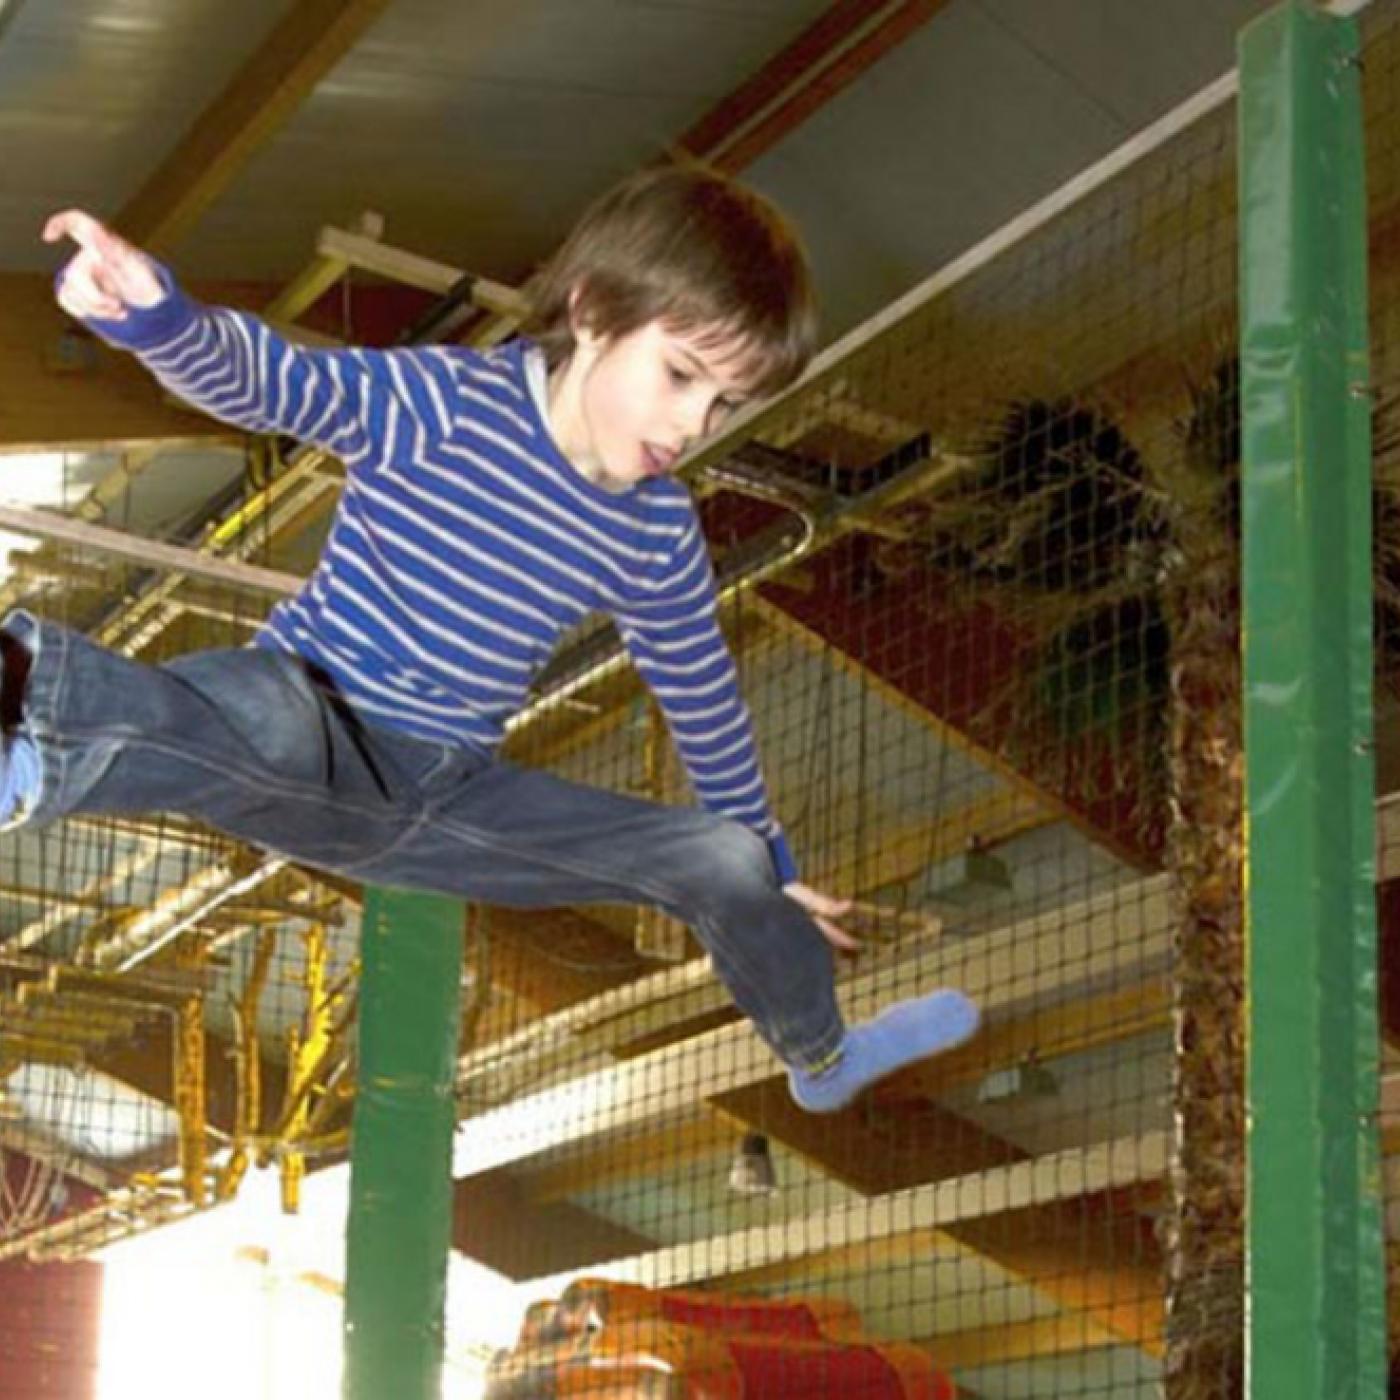 Trampolin im Indoorspielplatz Hoppolino macht Kinder mega Spaß